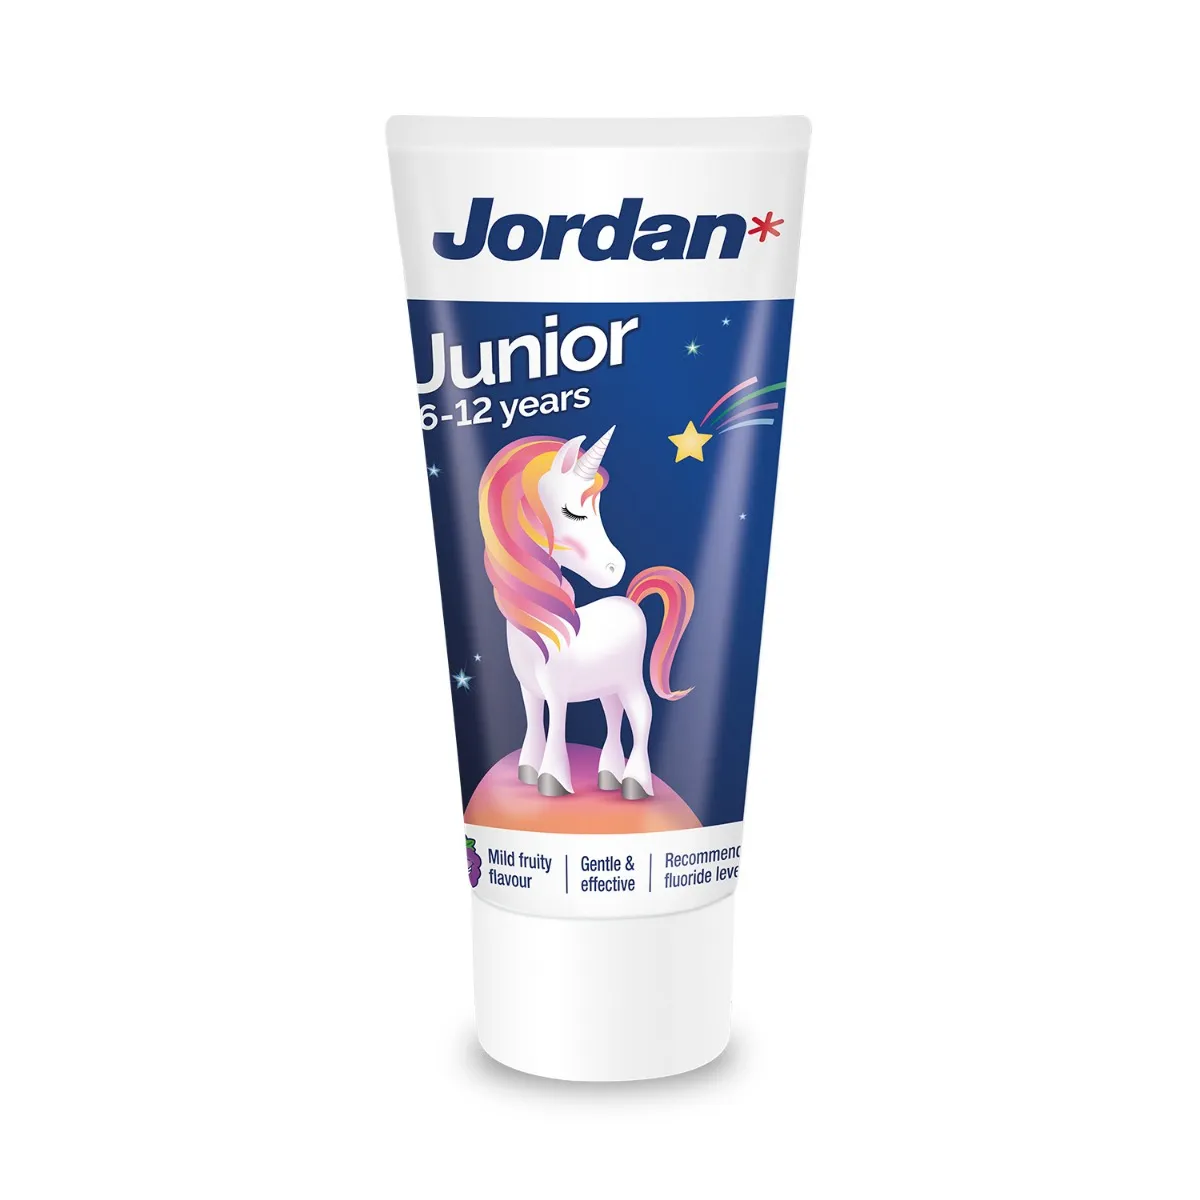 Jordan Junior Pasta do zębów 6-12 lat, 50 ml 